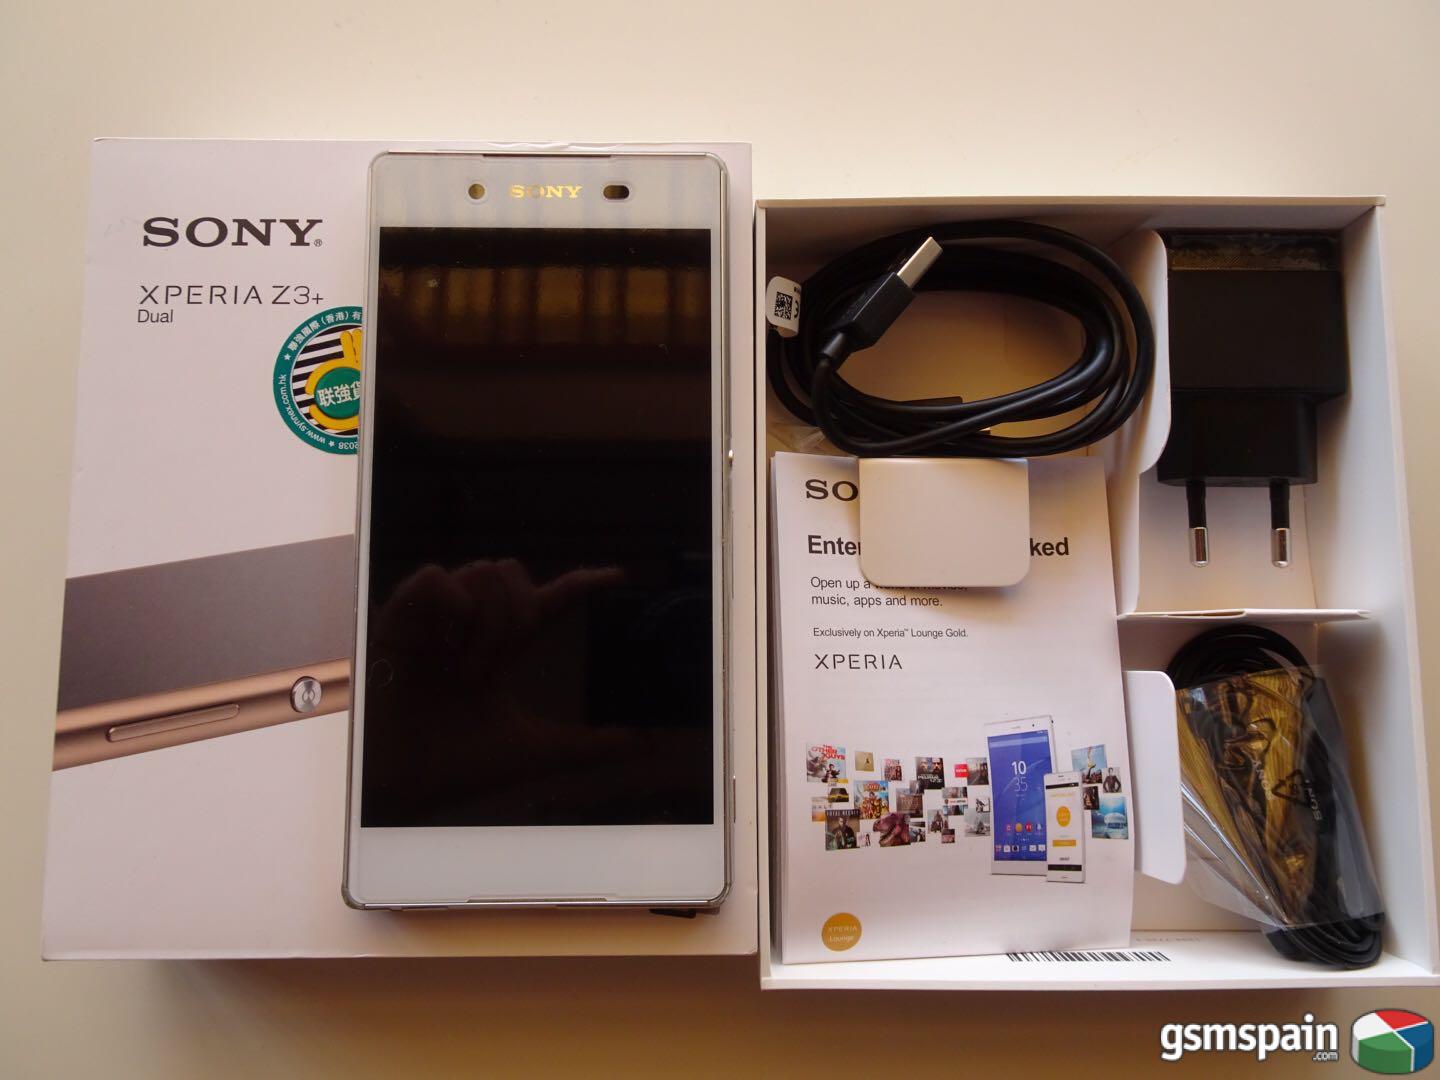 [VENDO] Sony Xperia Z4/Z3 plus exclusivo dual sim en caja. preciazo 219 g.i!!